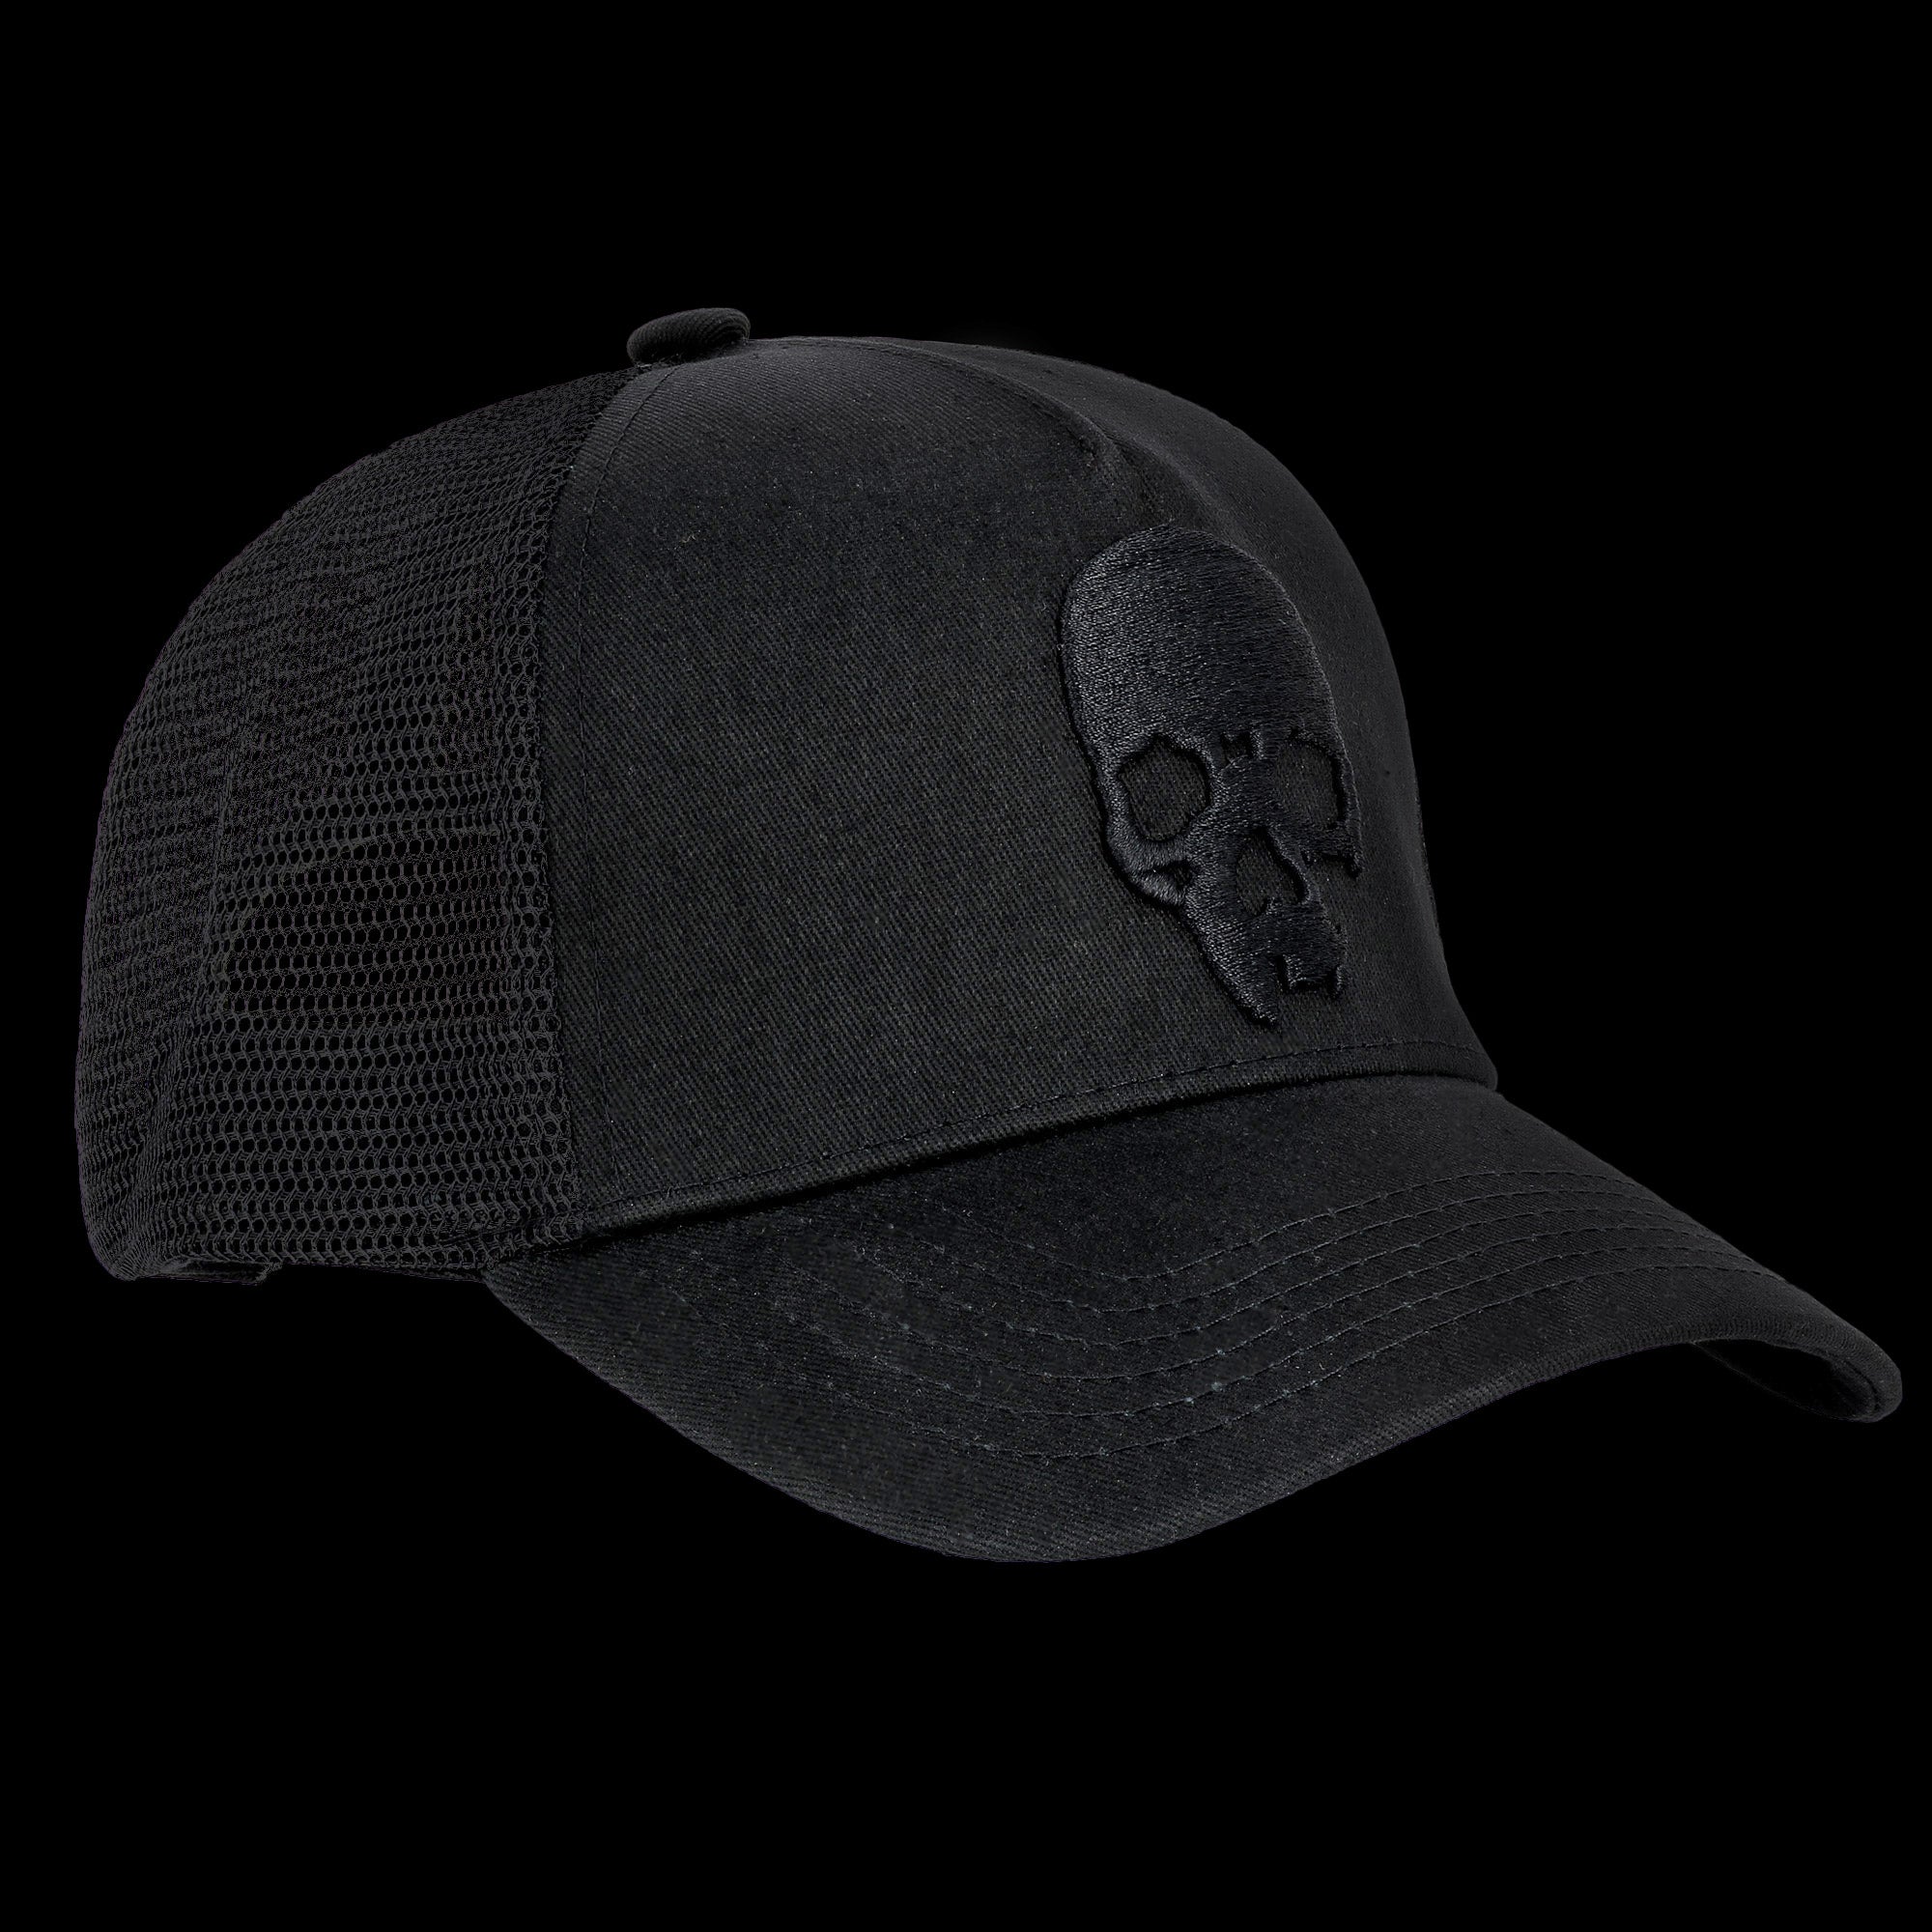 Trucker baseball Cap with 3D Jolly Roger skull embroidery - Black